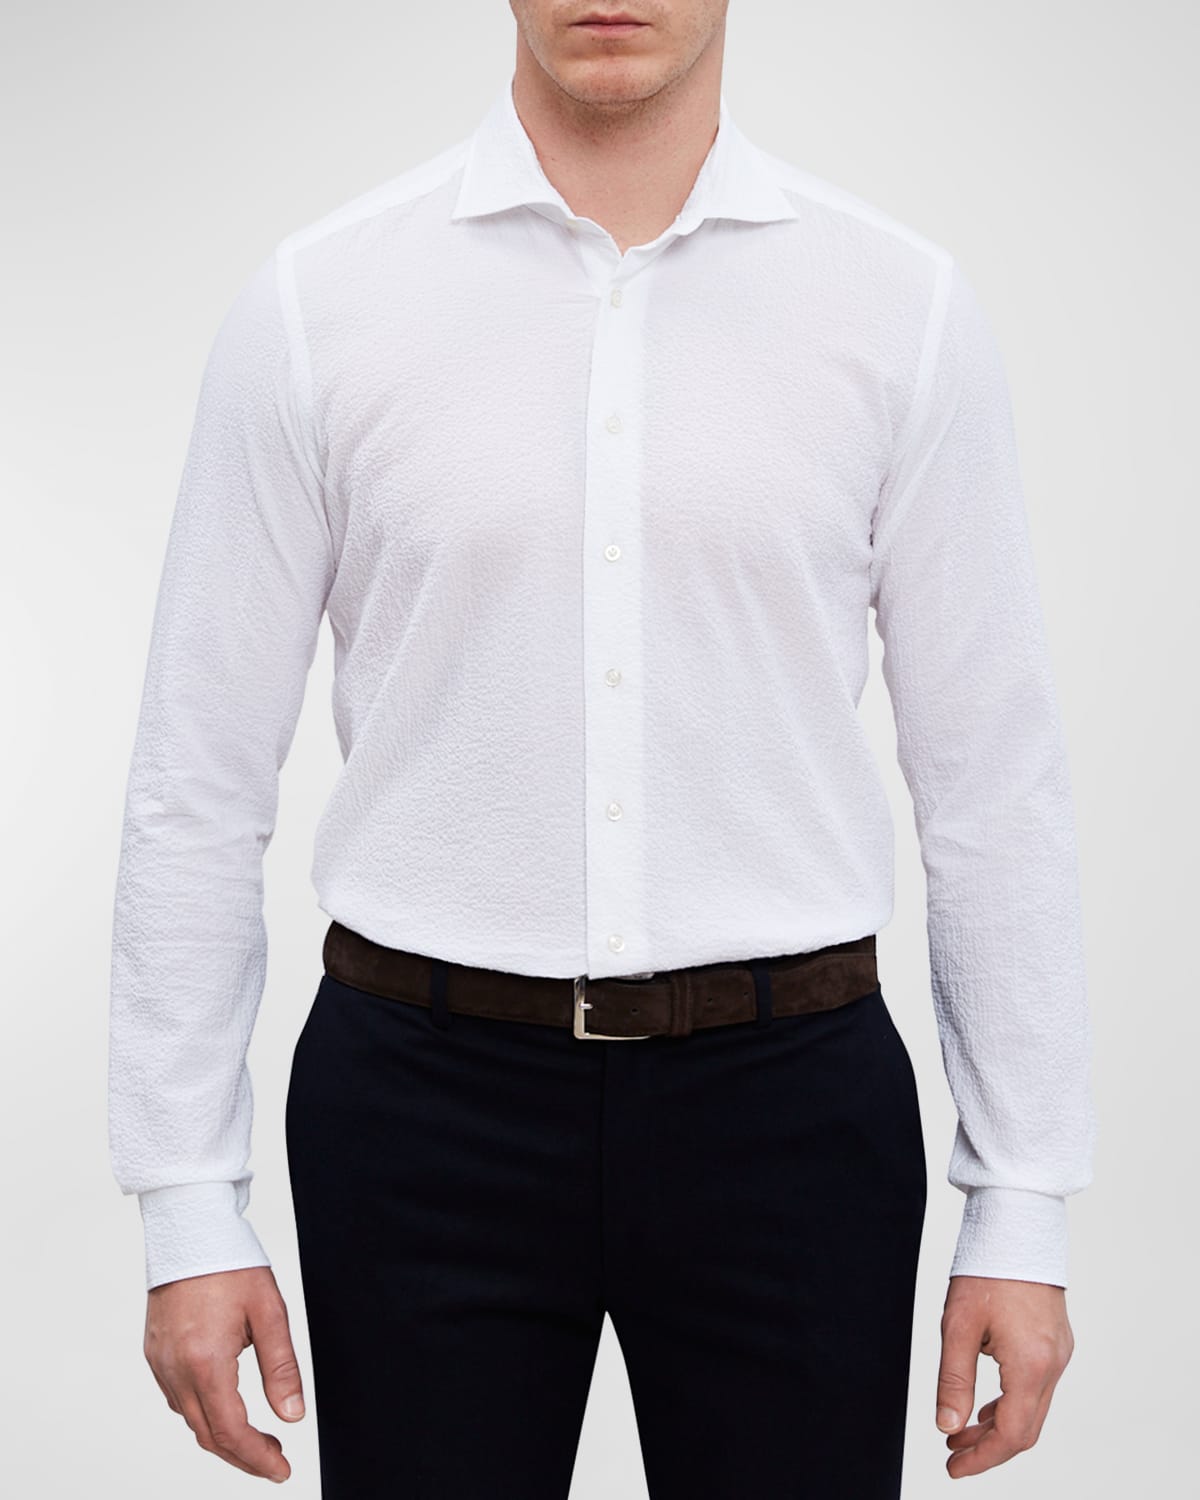 Men's Crinkle Textured Sport Shirt